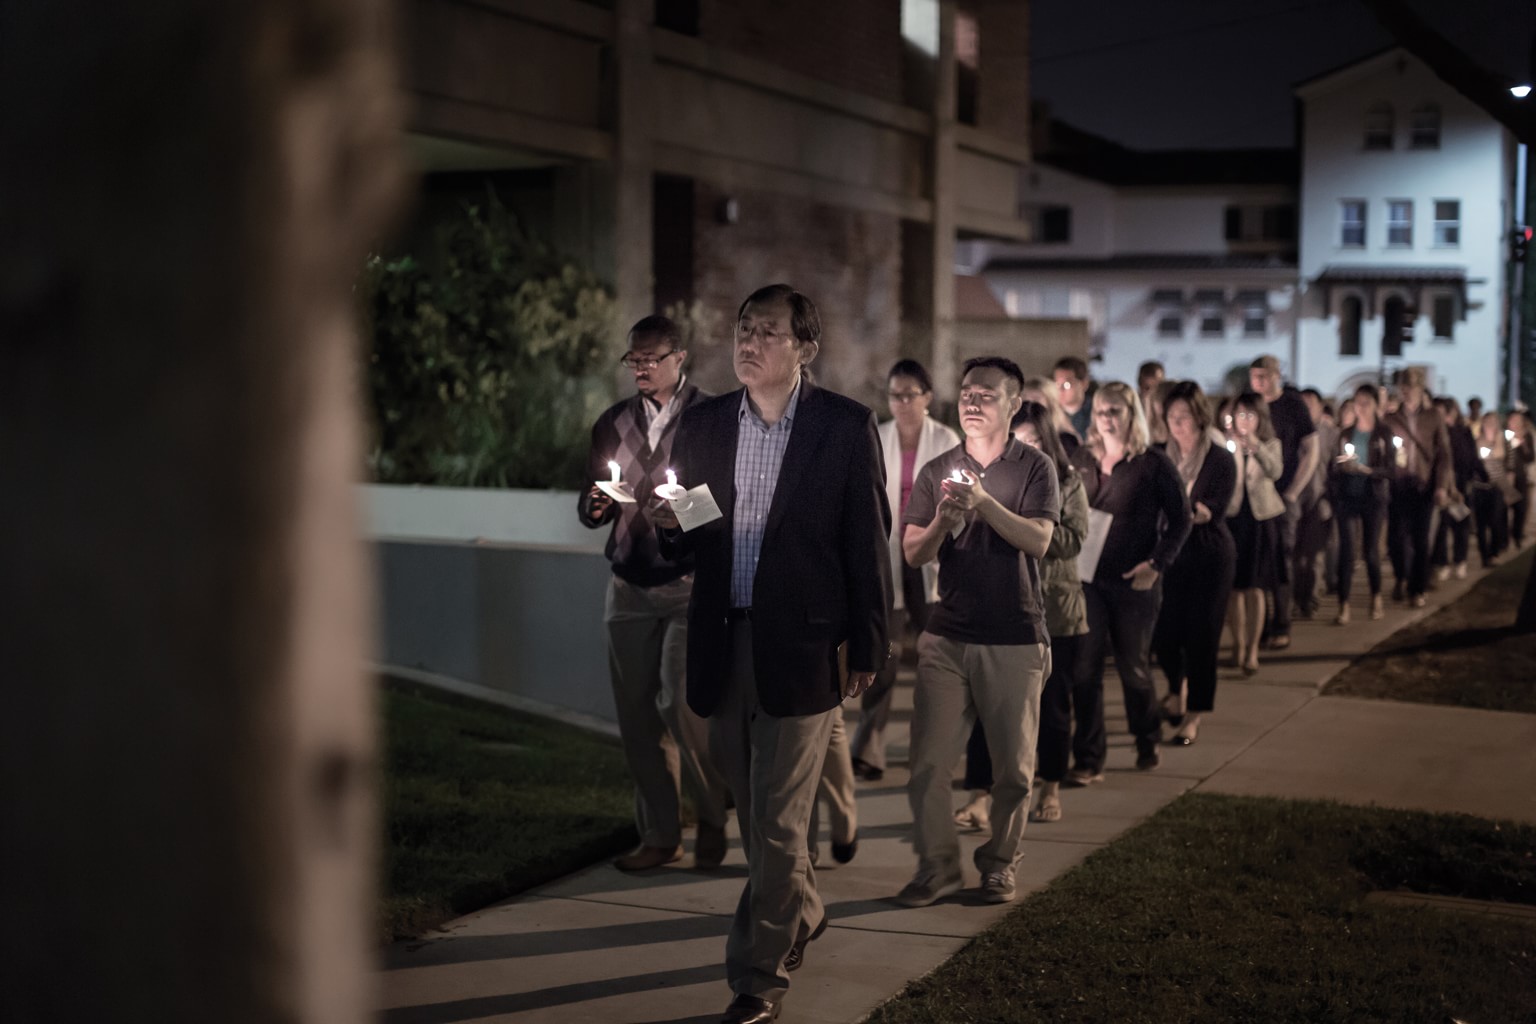 The Fuller Seminary community in Pasadena gathers for a prayer vigil